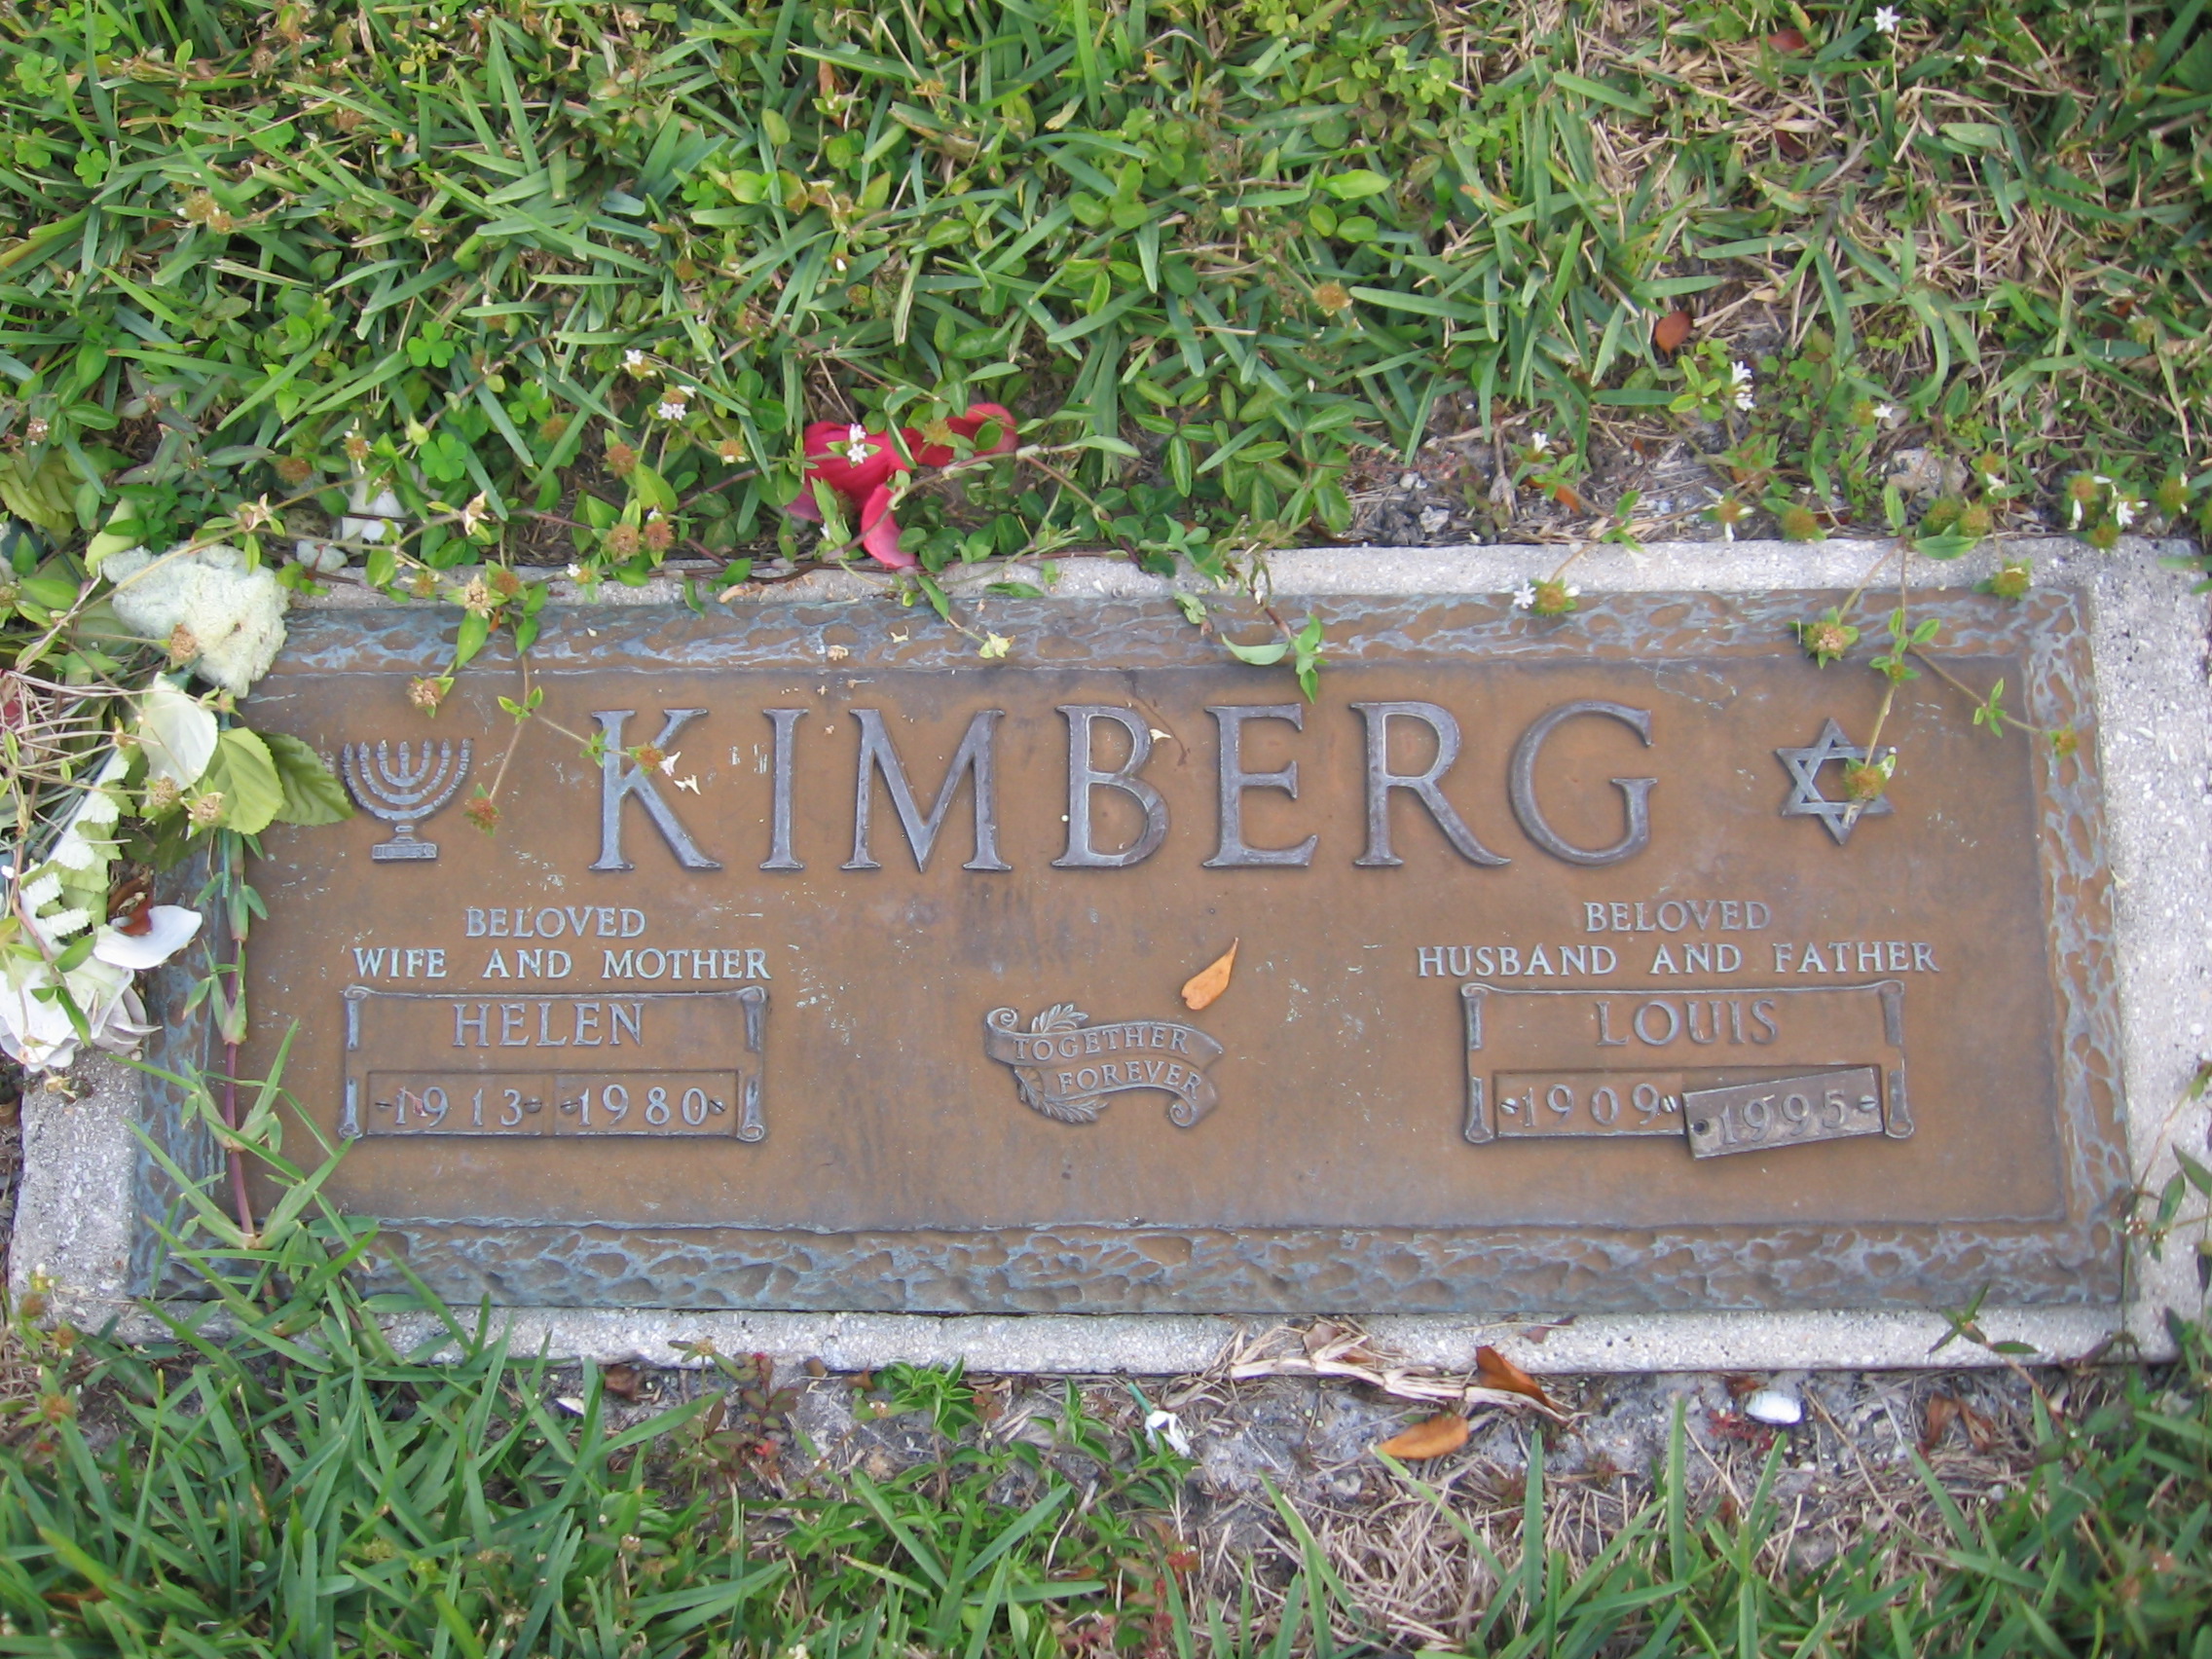 Louis Kimberg